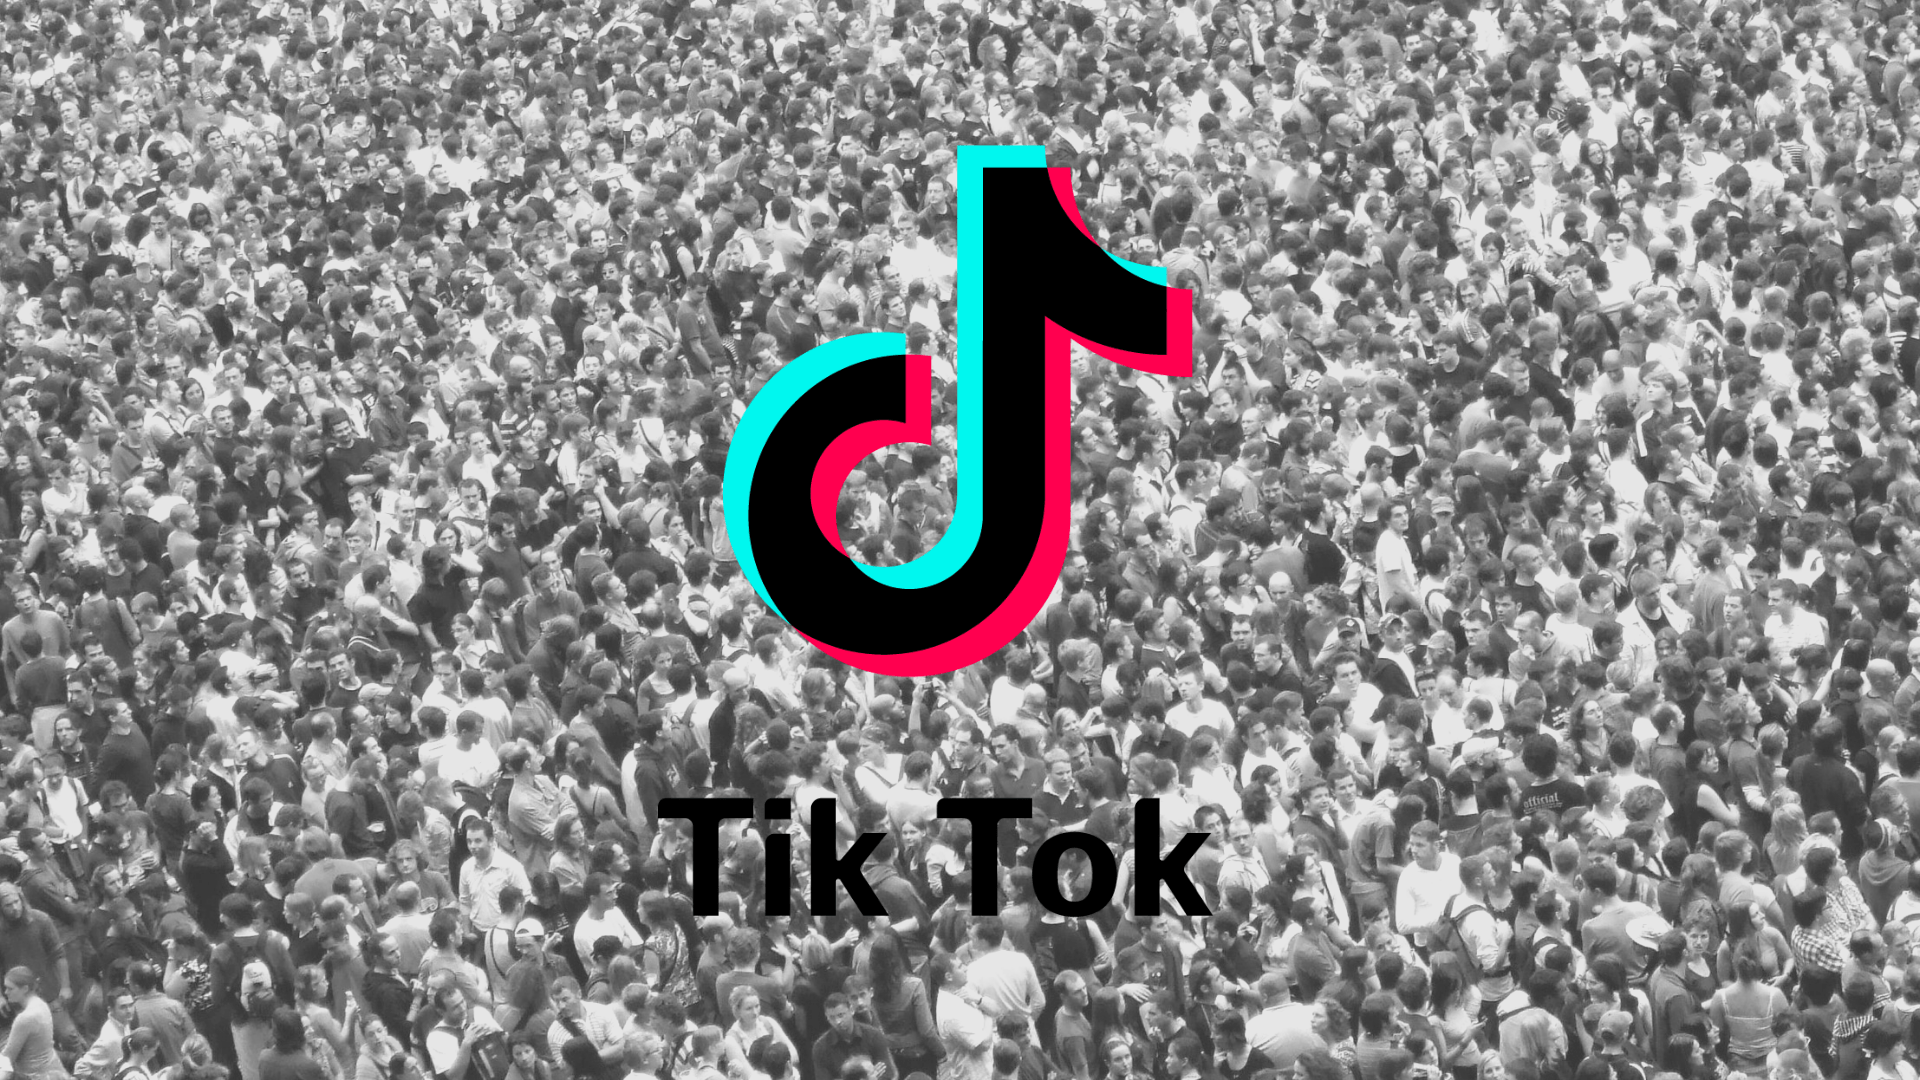 Tiktok for download wallpaper Cool How